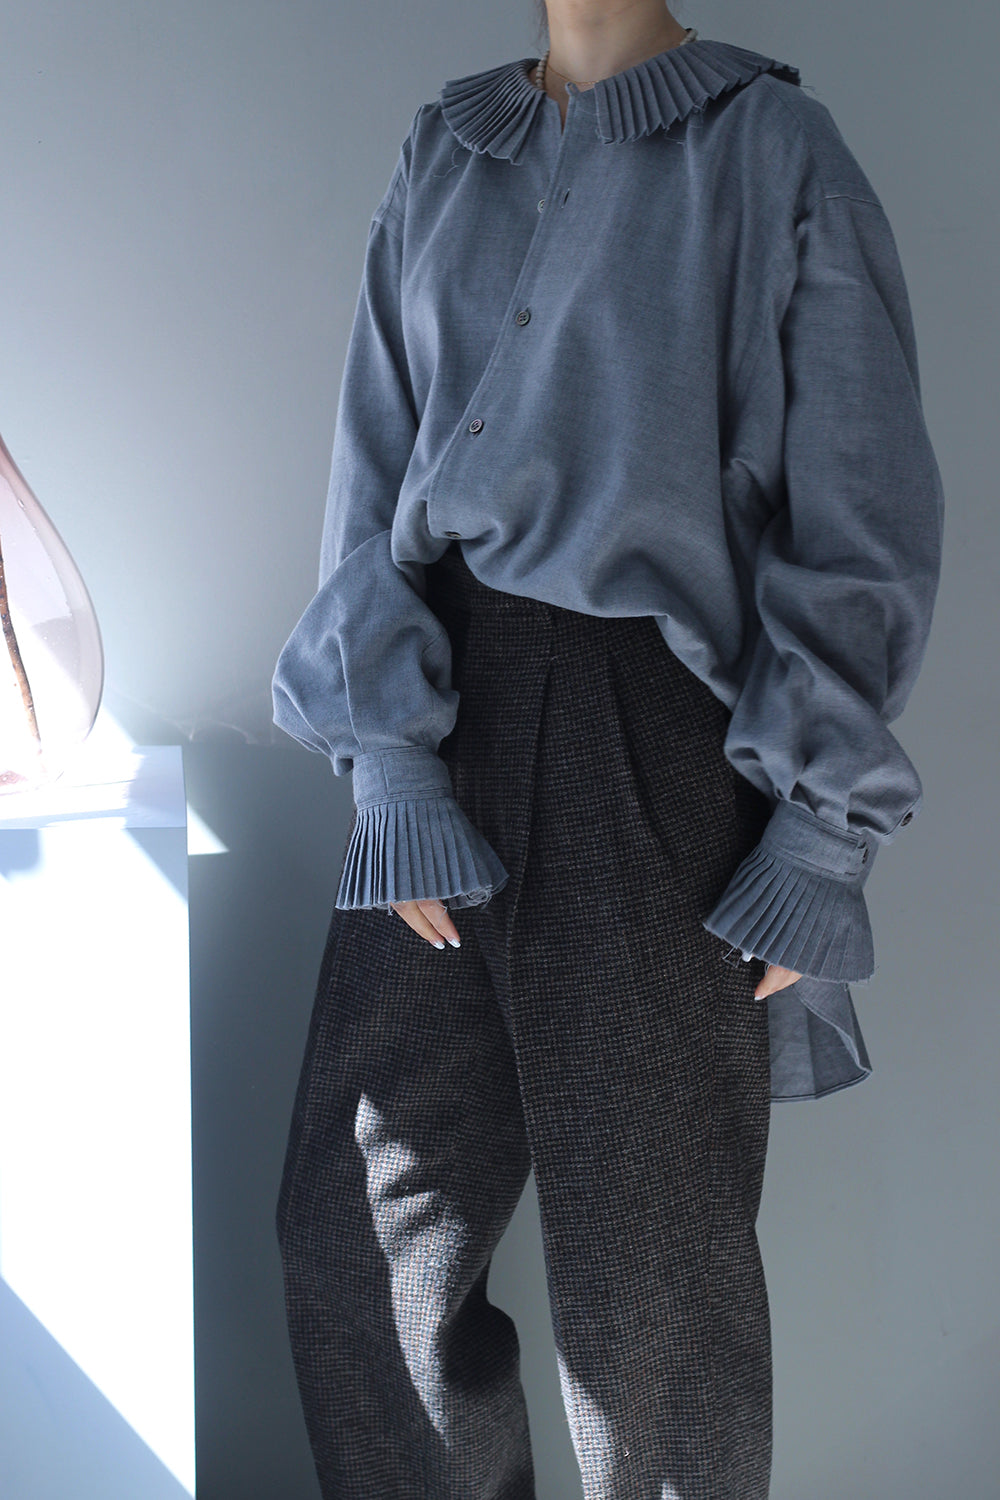 JUN MIAKMI “pleated collar wool blend shirt“ (gray)